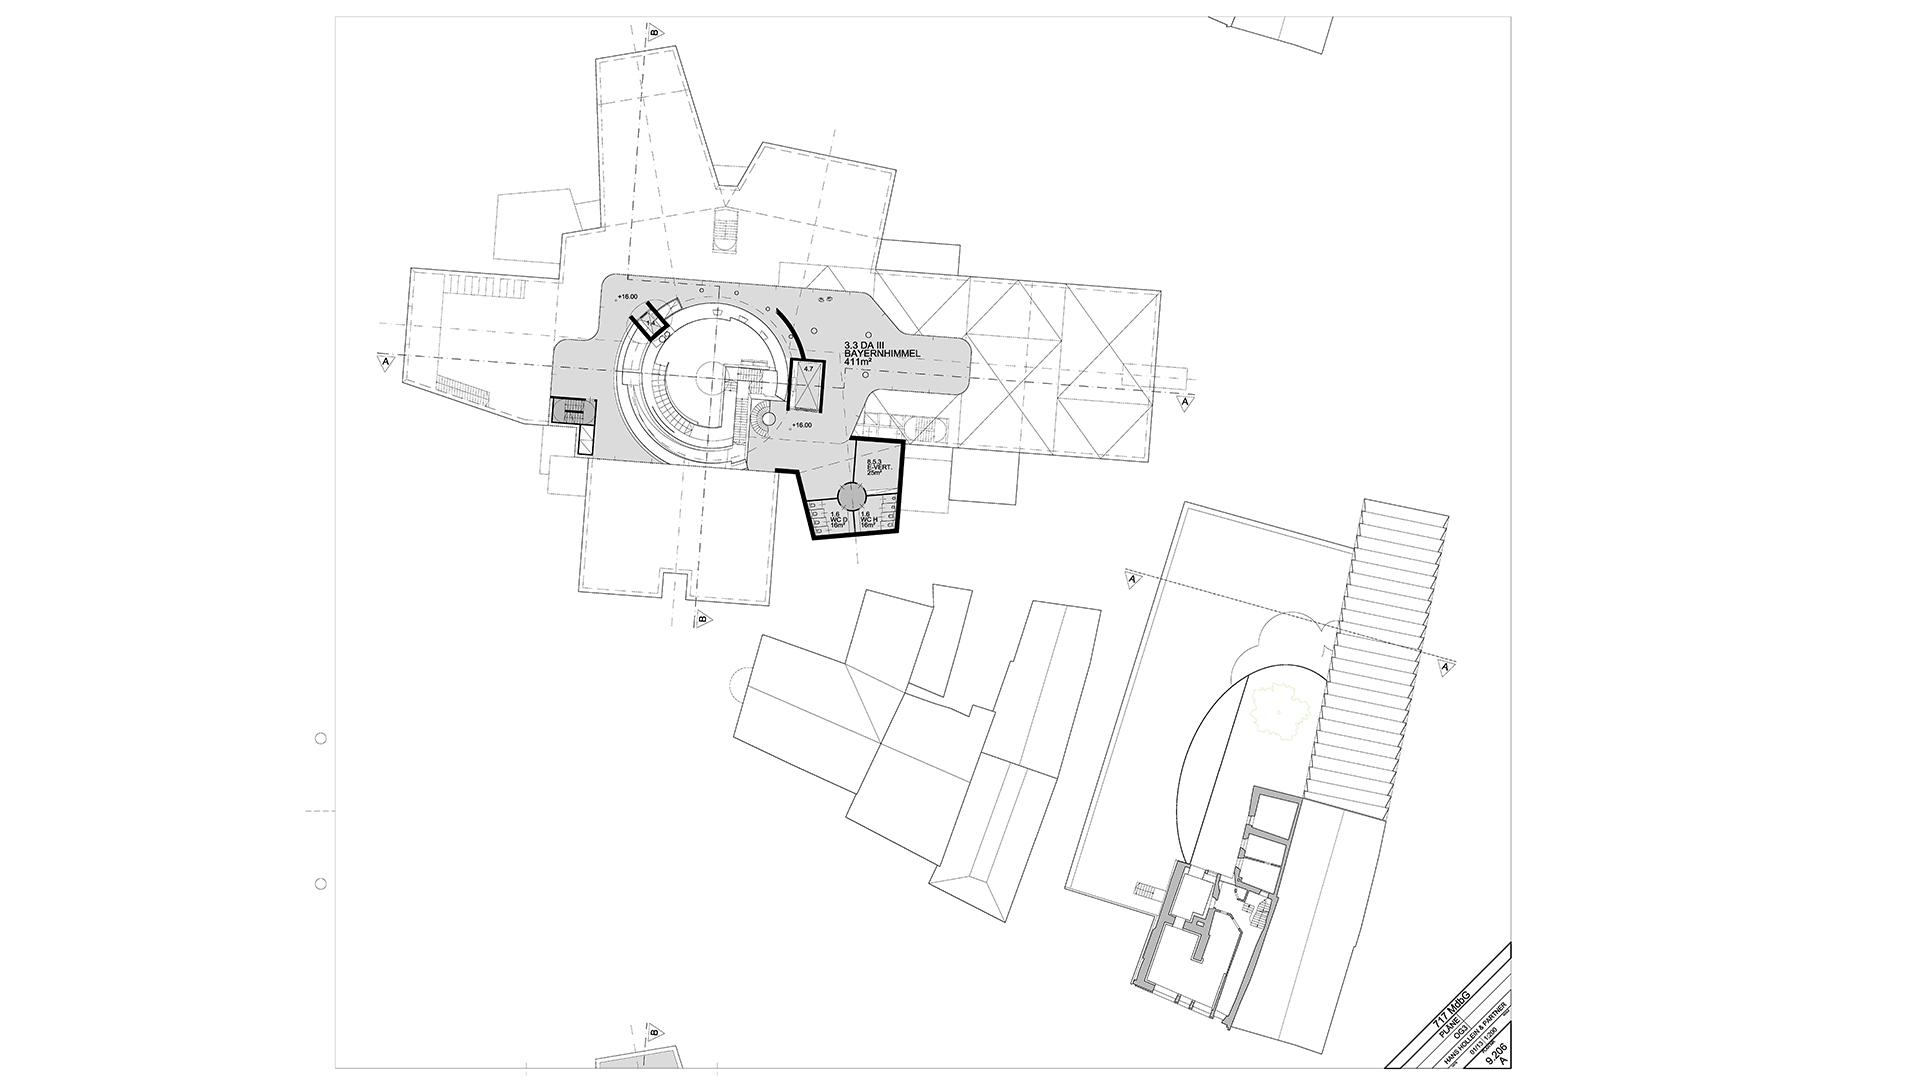 OHA - 717 MUSEUM BAYERISCHE GESCHICHTE 15 - Office For Heuristic Architecture